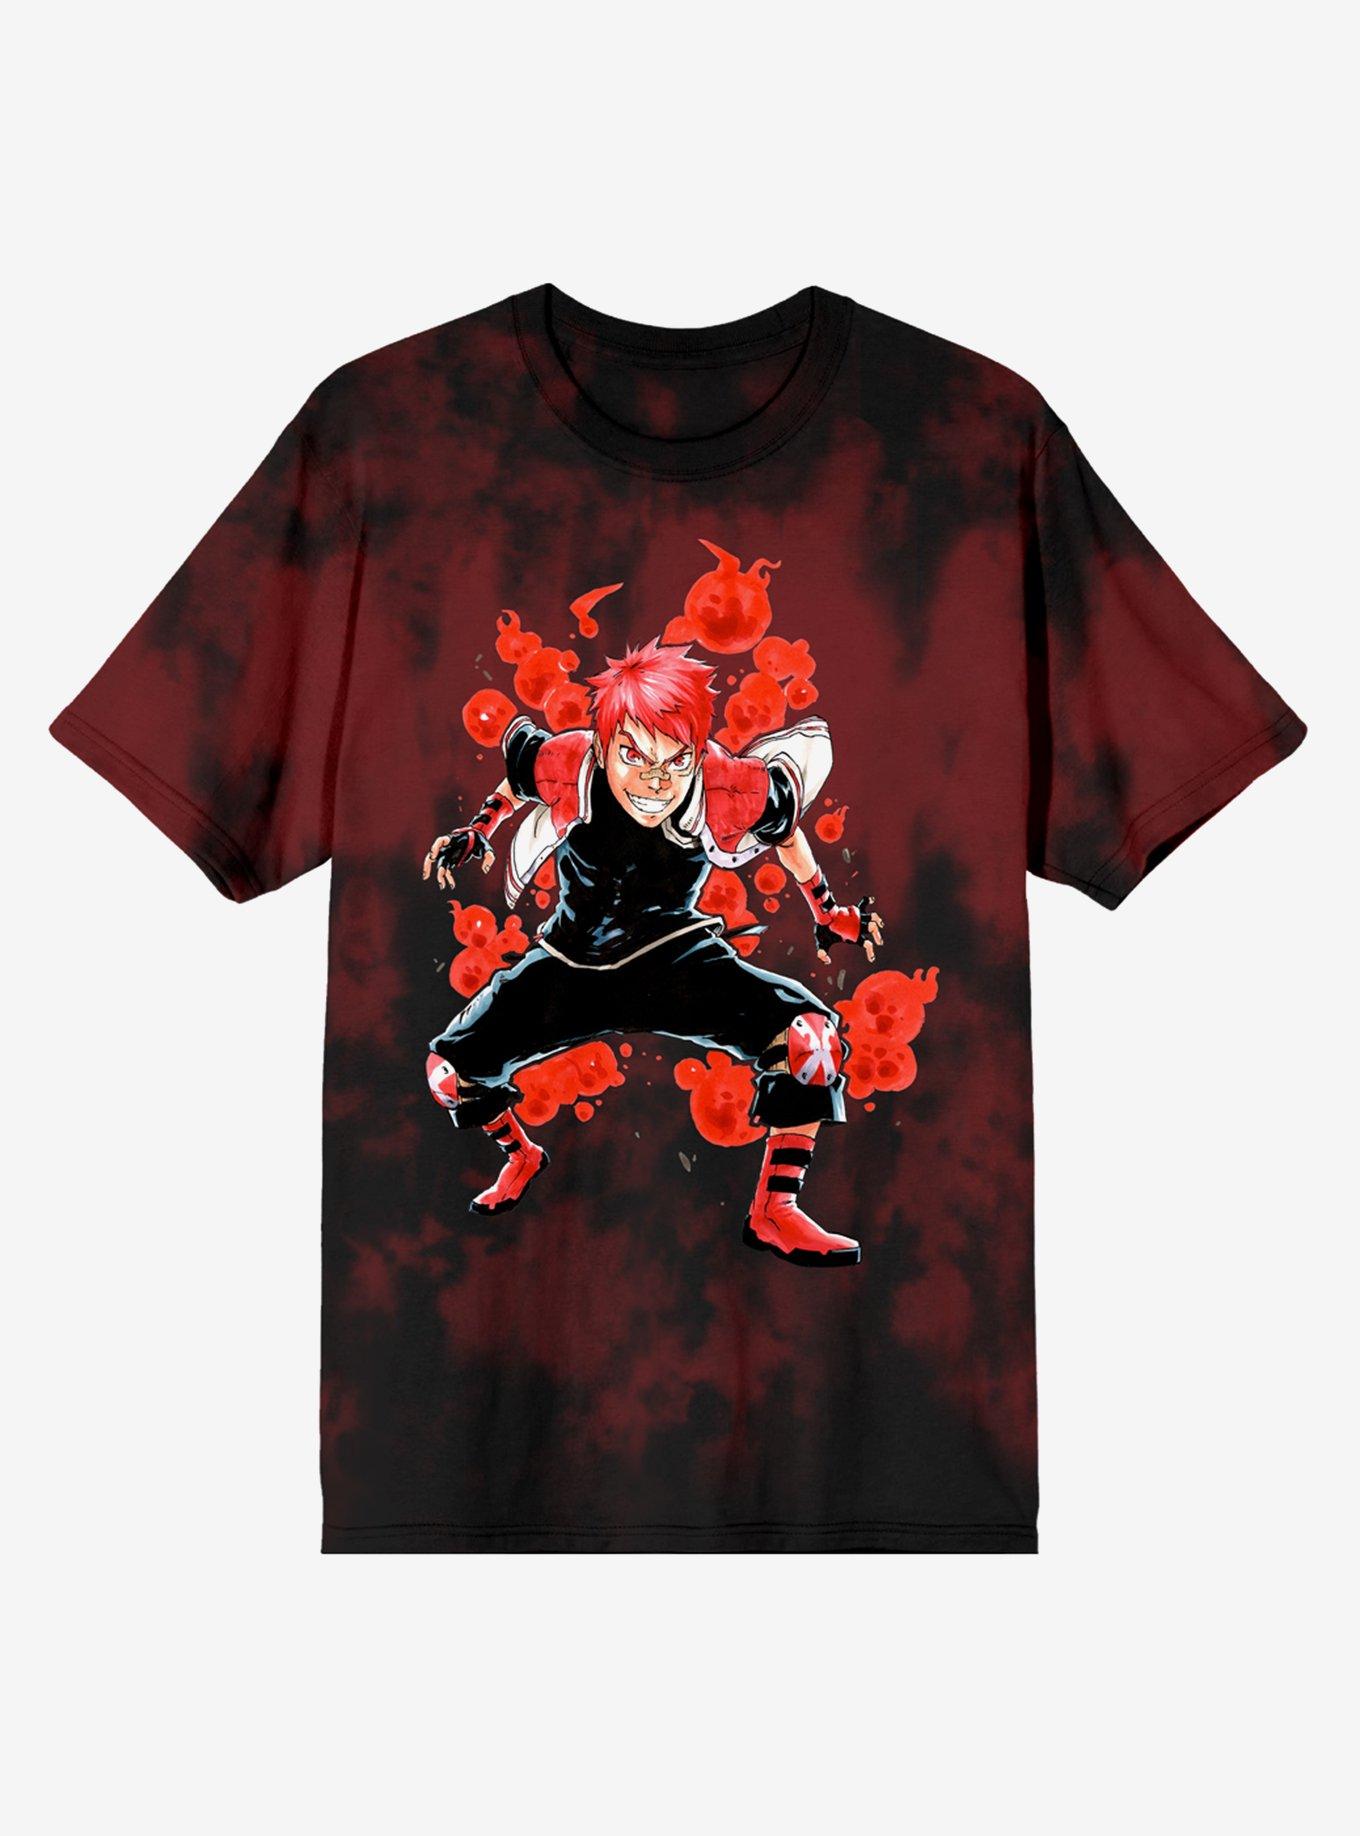 Ryuzaki T-Shirts for Sale